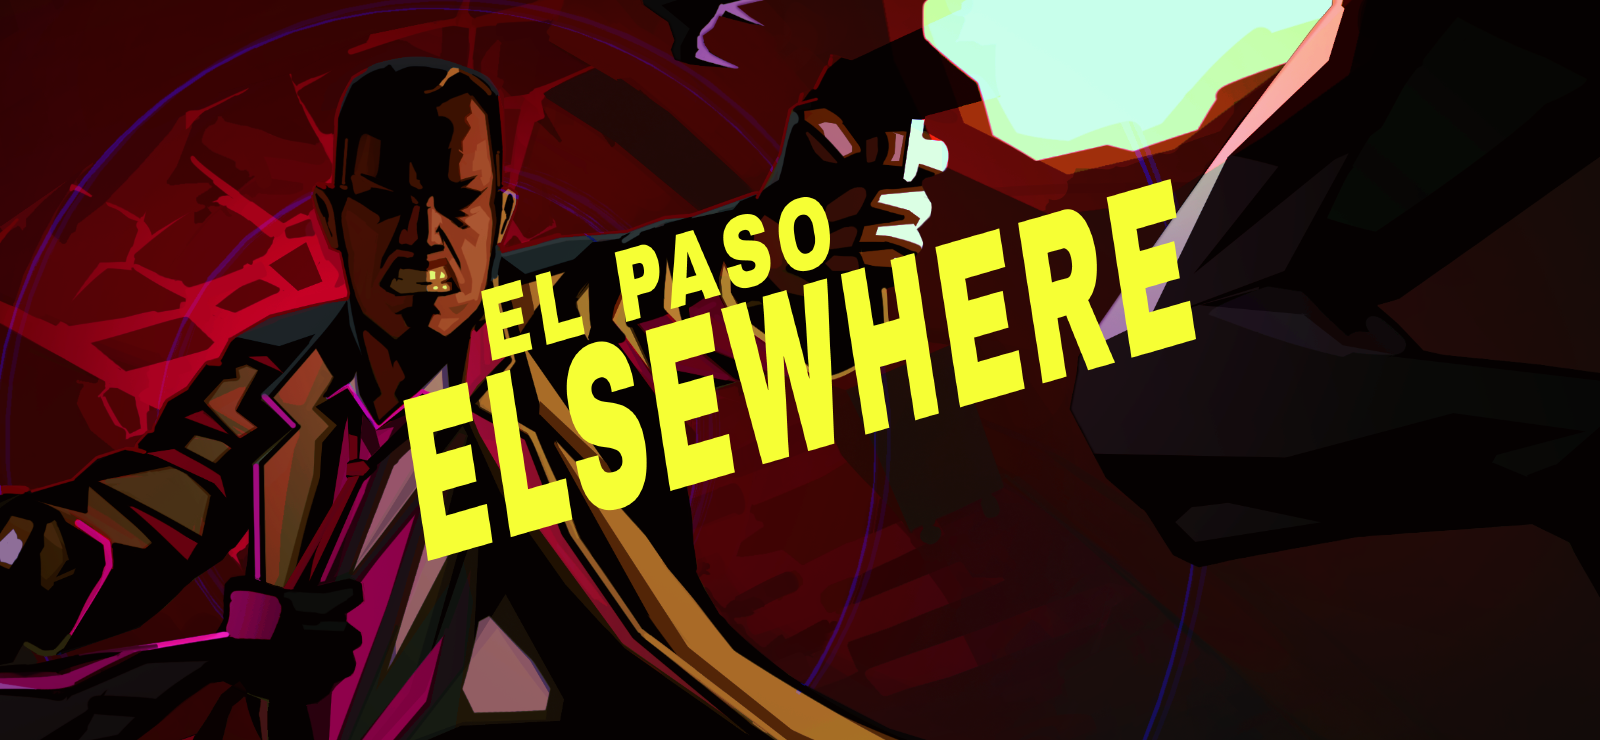 El Paso, Elsewhere: The Rap Album